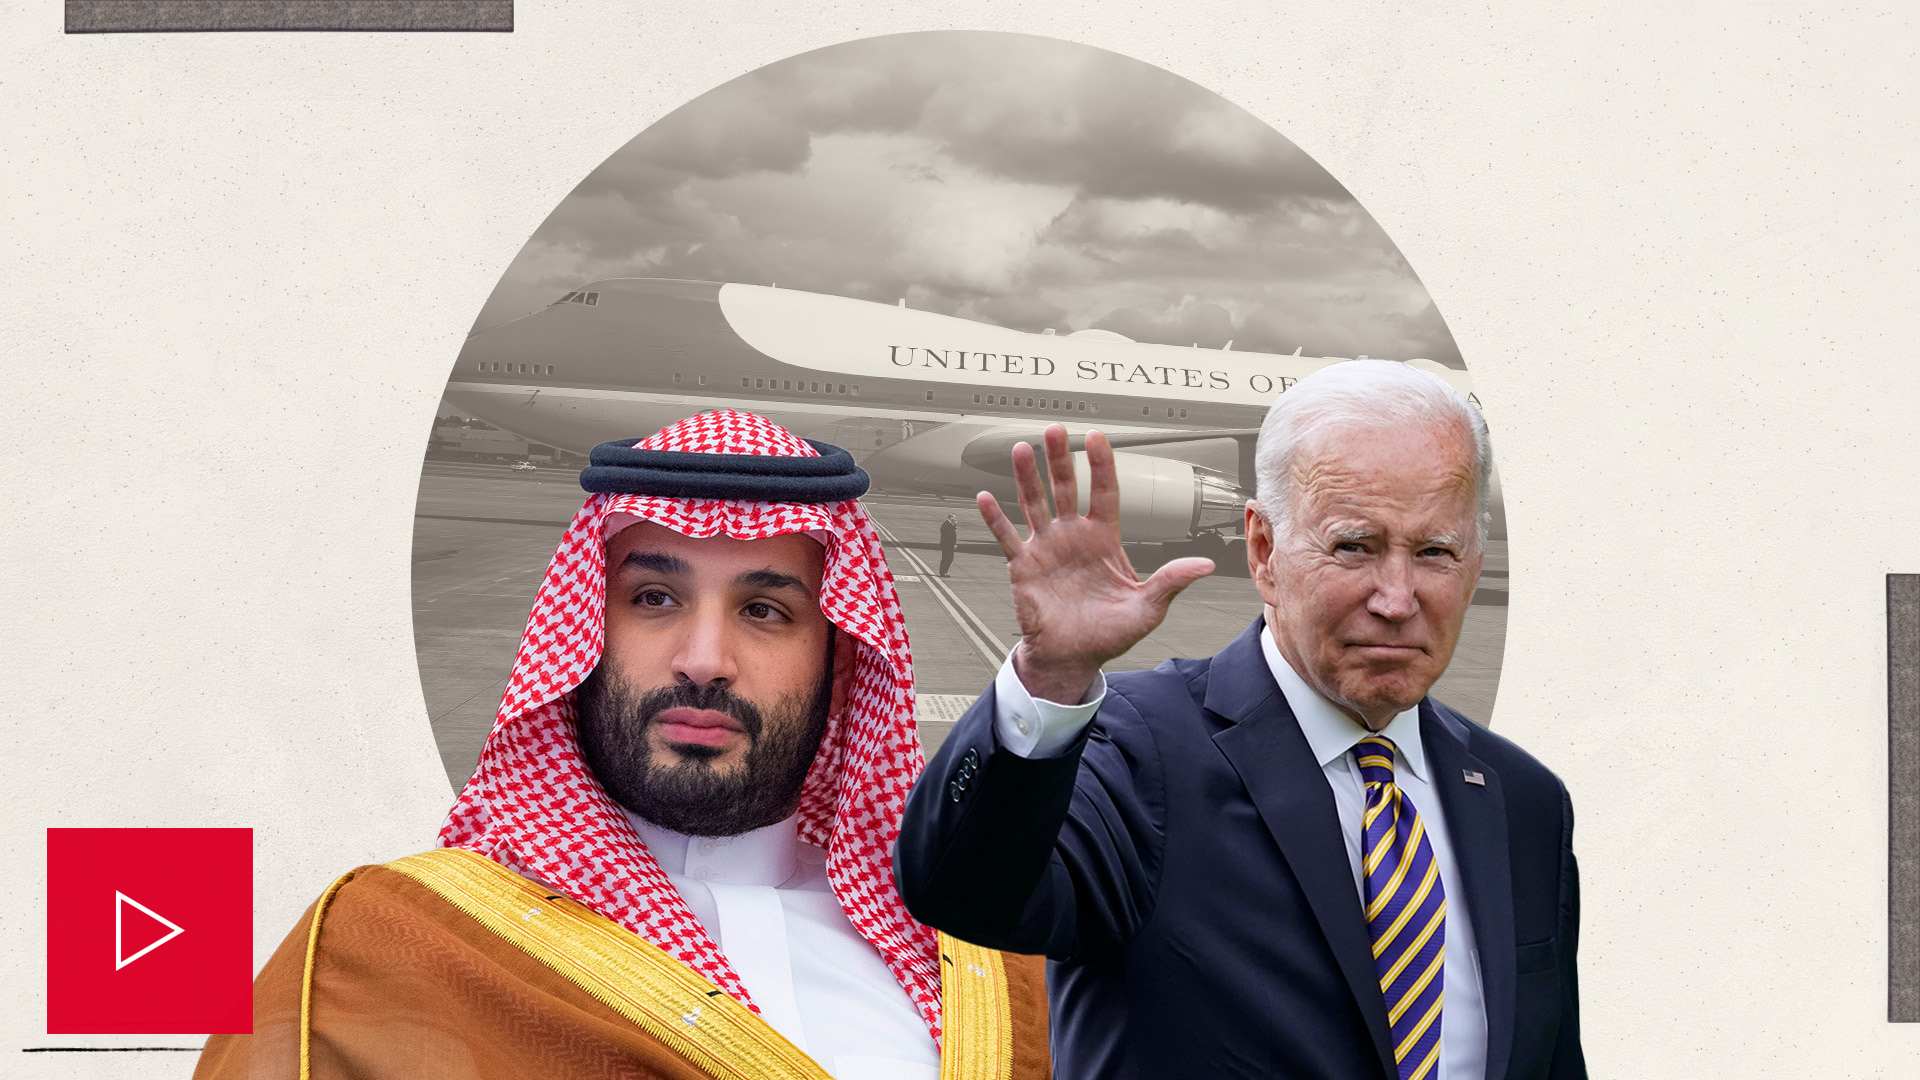 President Joe Biden and Saudi Crown Prince Mohammed bin Salman are seen in a collage.